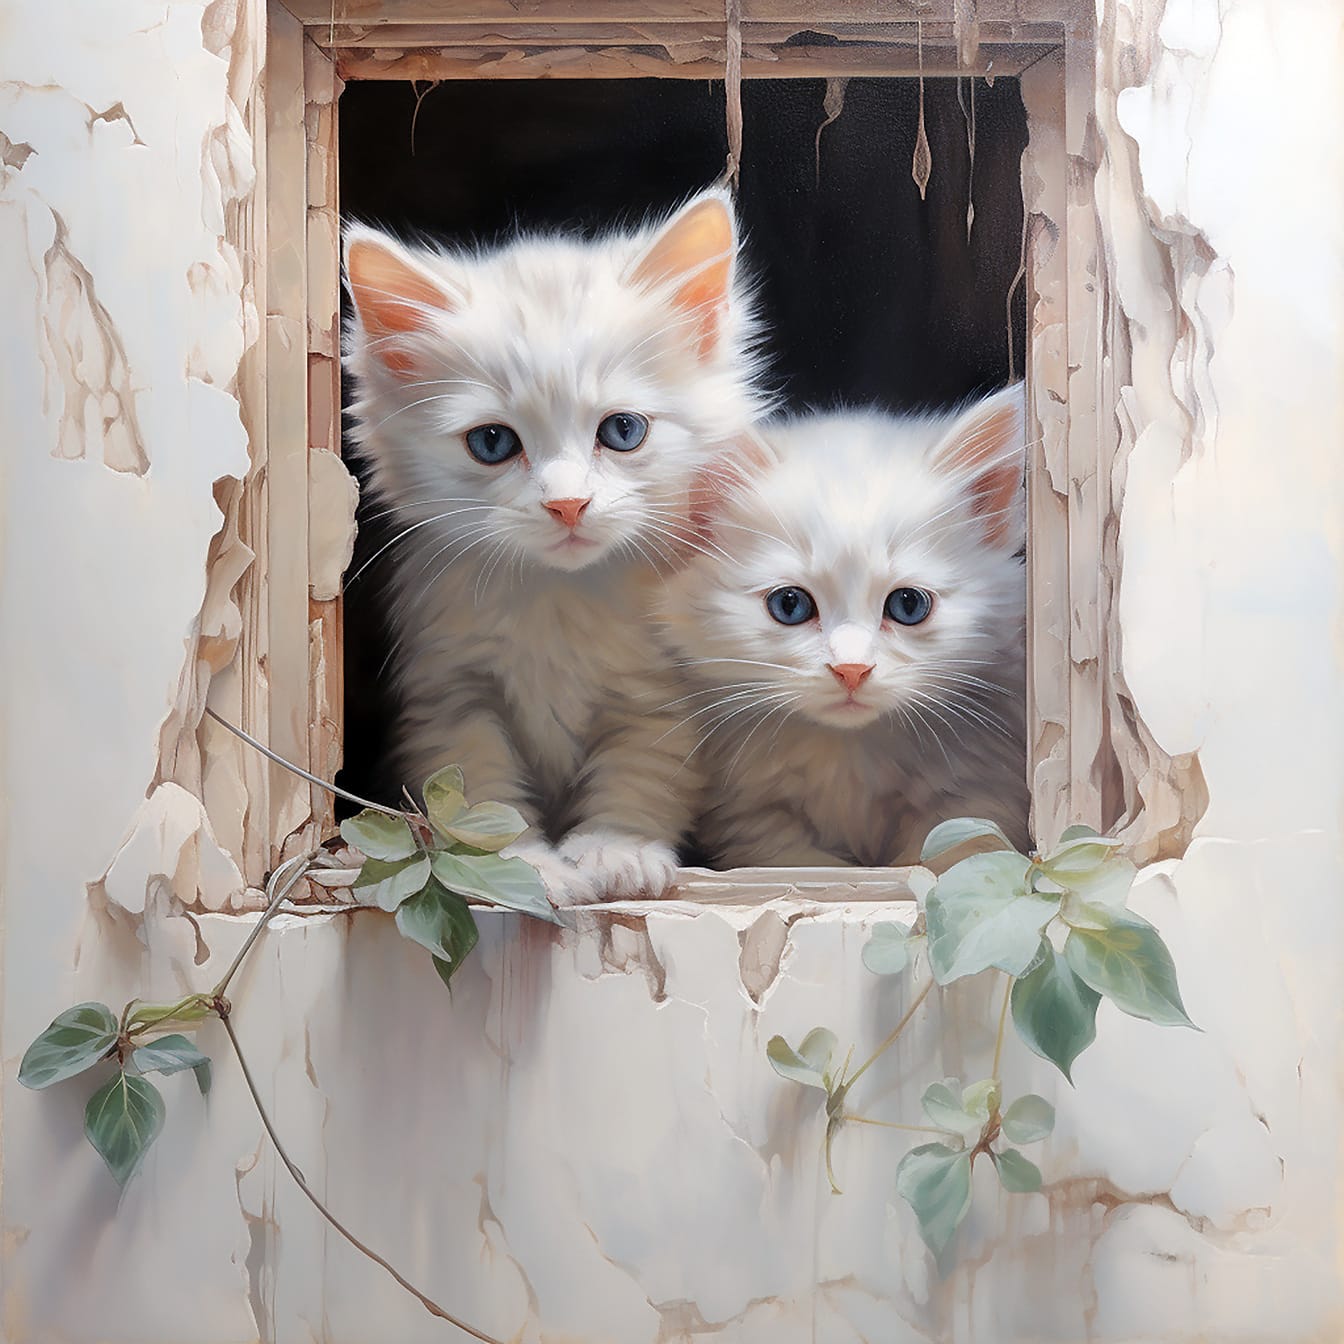 Adorables gatitos con ojos azules en la ventana de descomposición